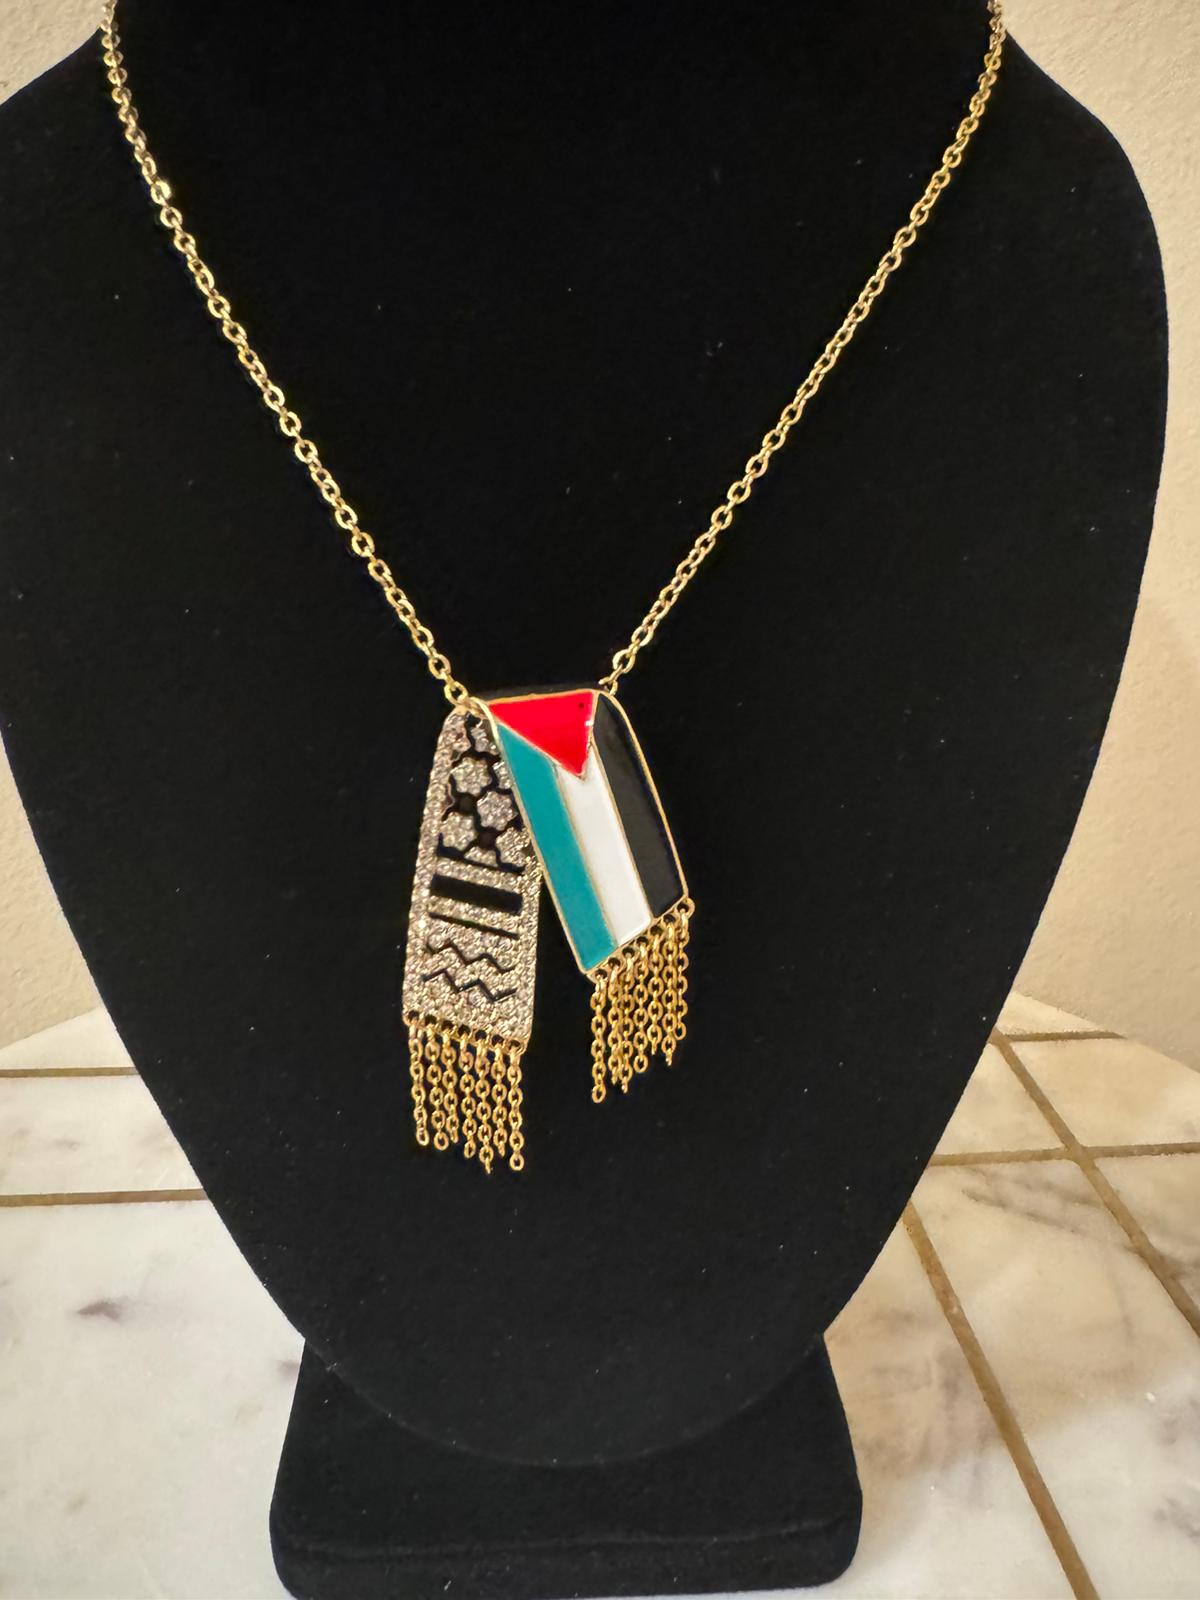 Palestine Keffiyeh Necklace - Habibi Heritage